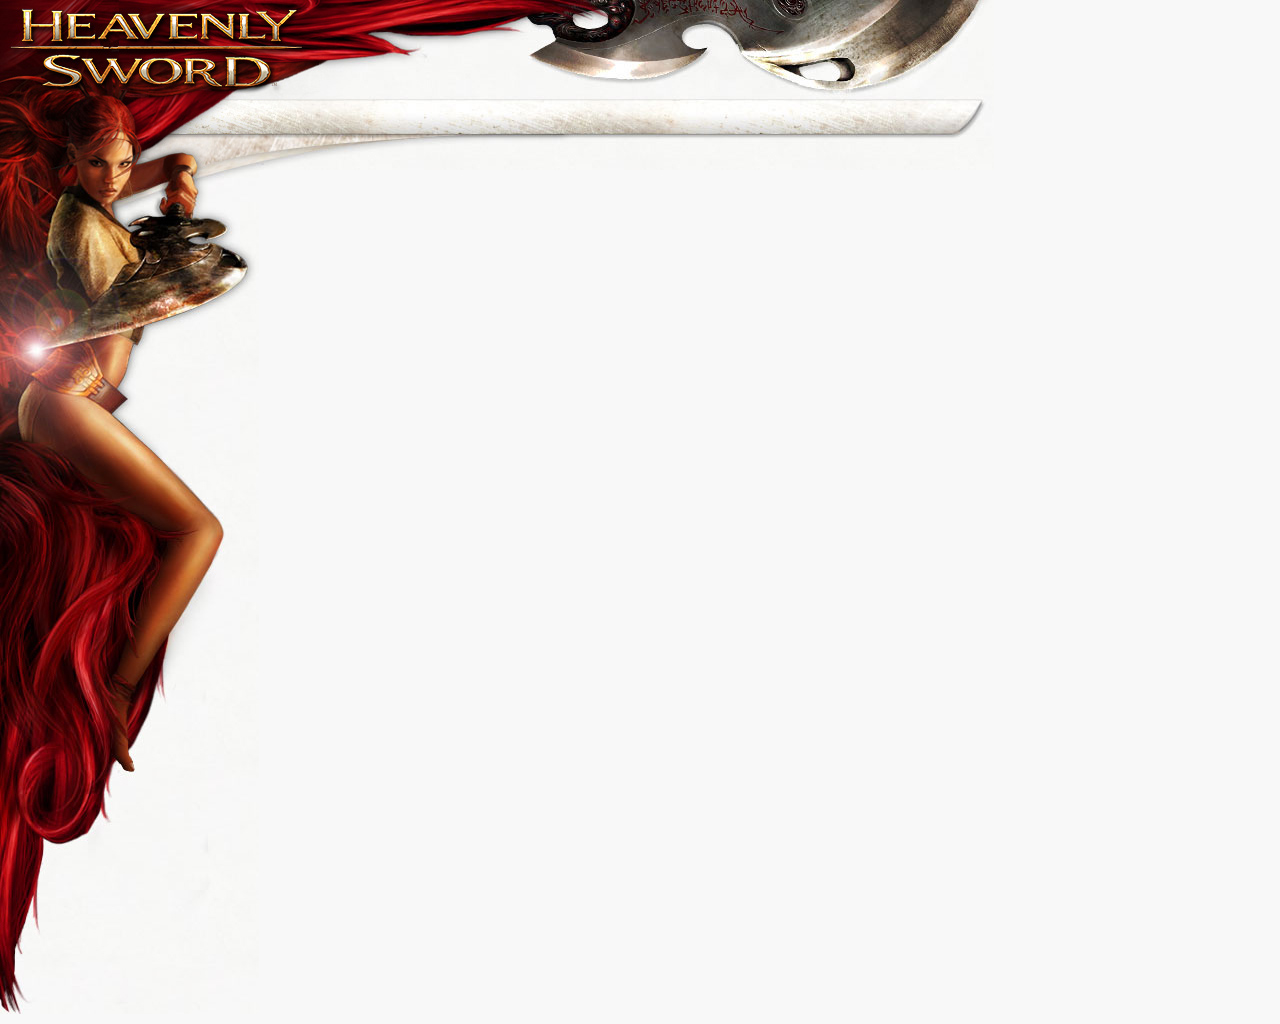 video game, red hair, heavenly sword